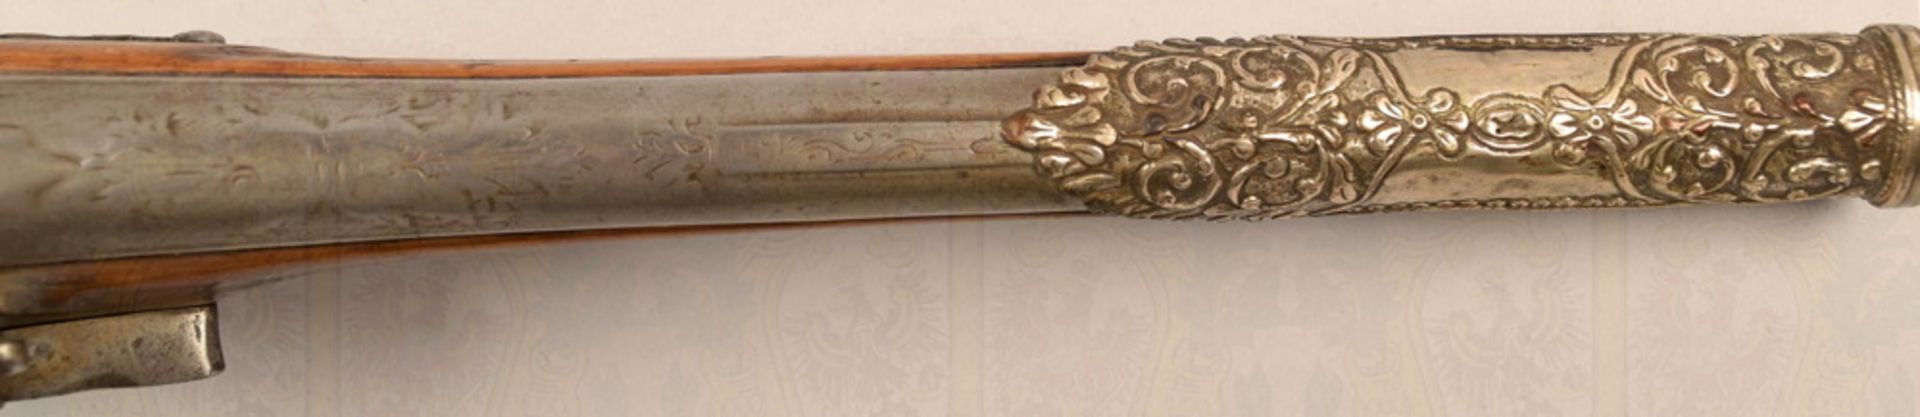 Luxury flintlock pistol made about 1780-1800 - Image 3 of 5